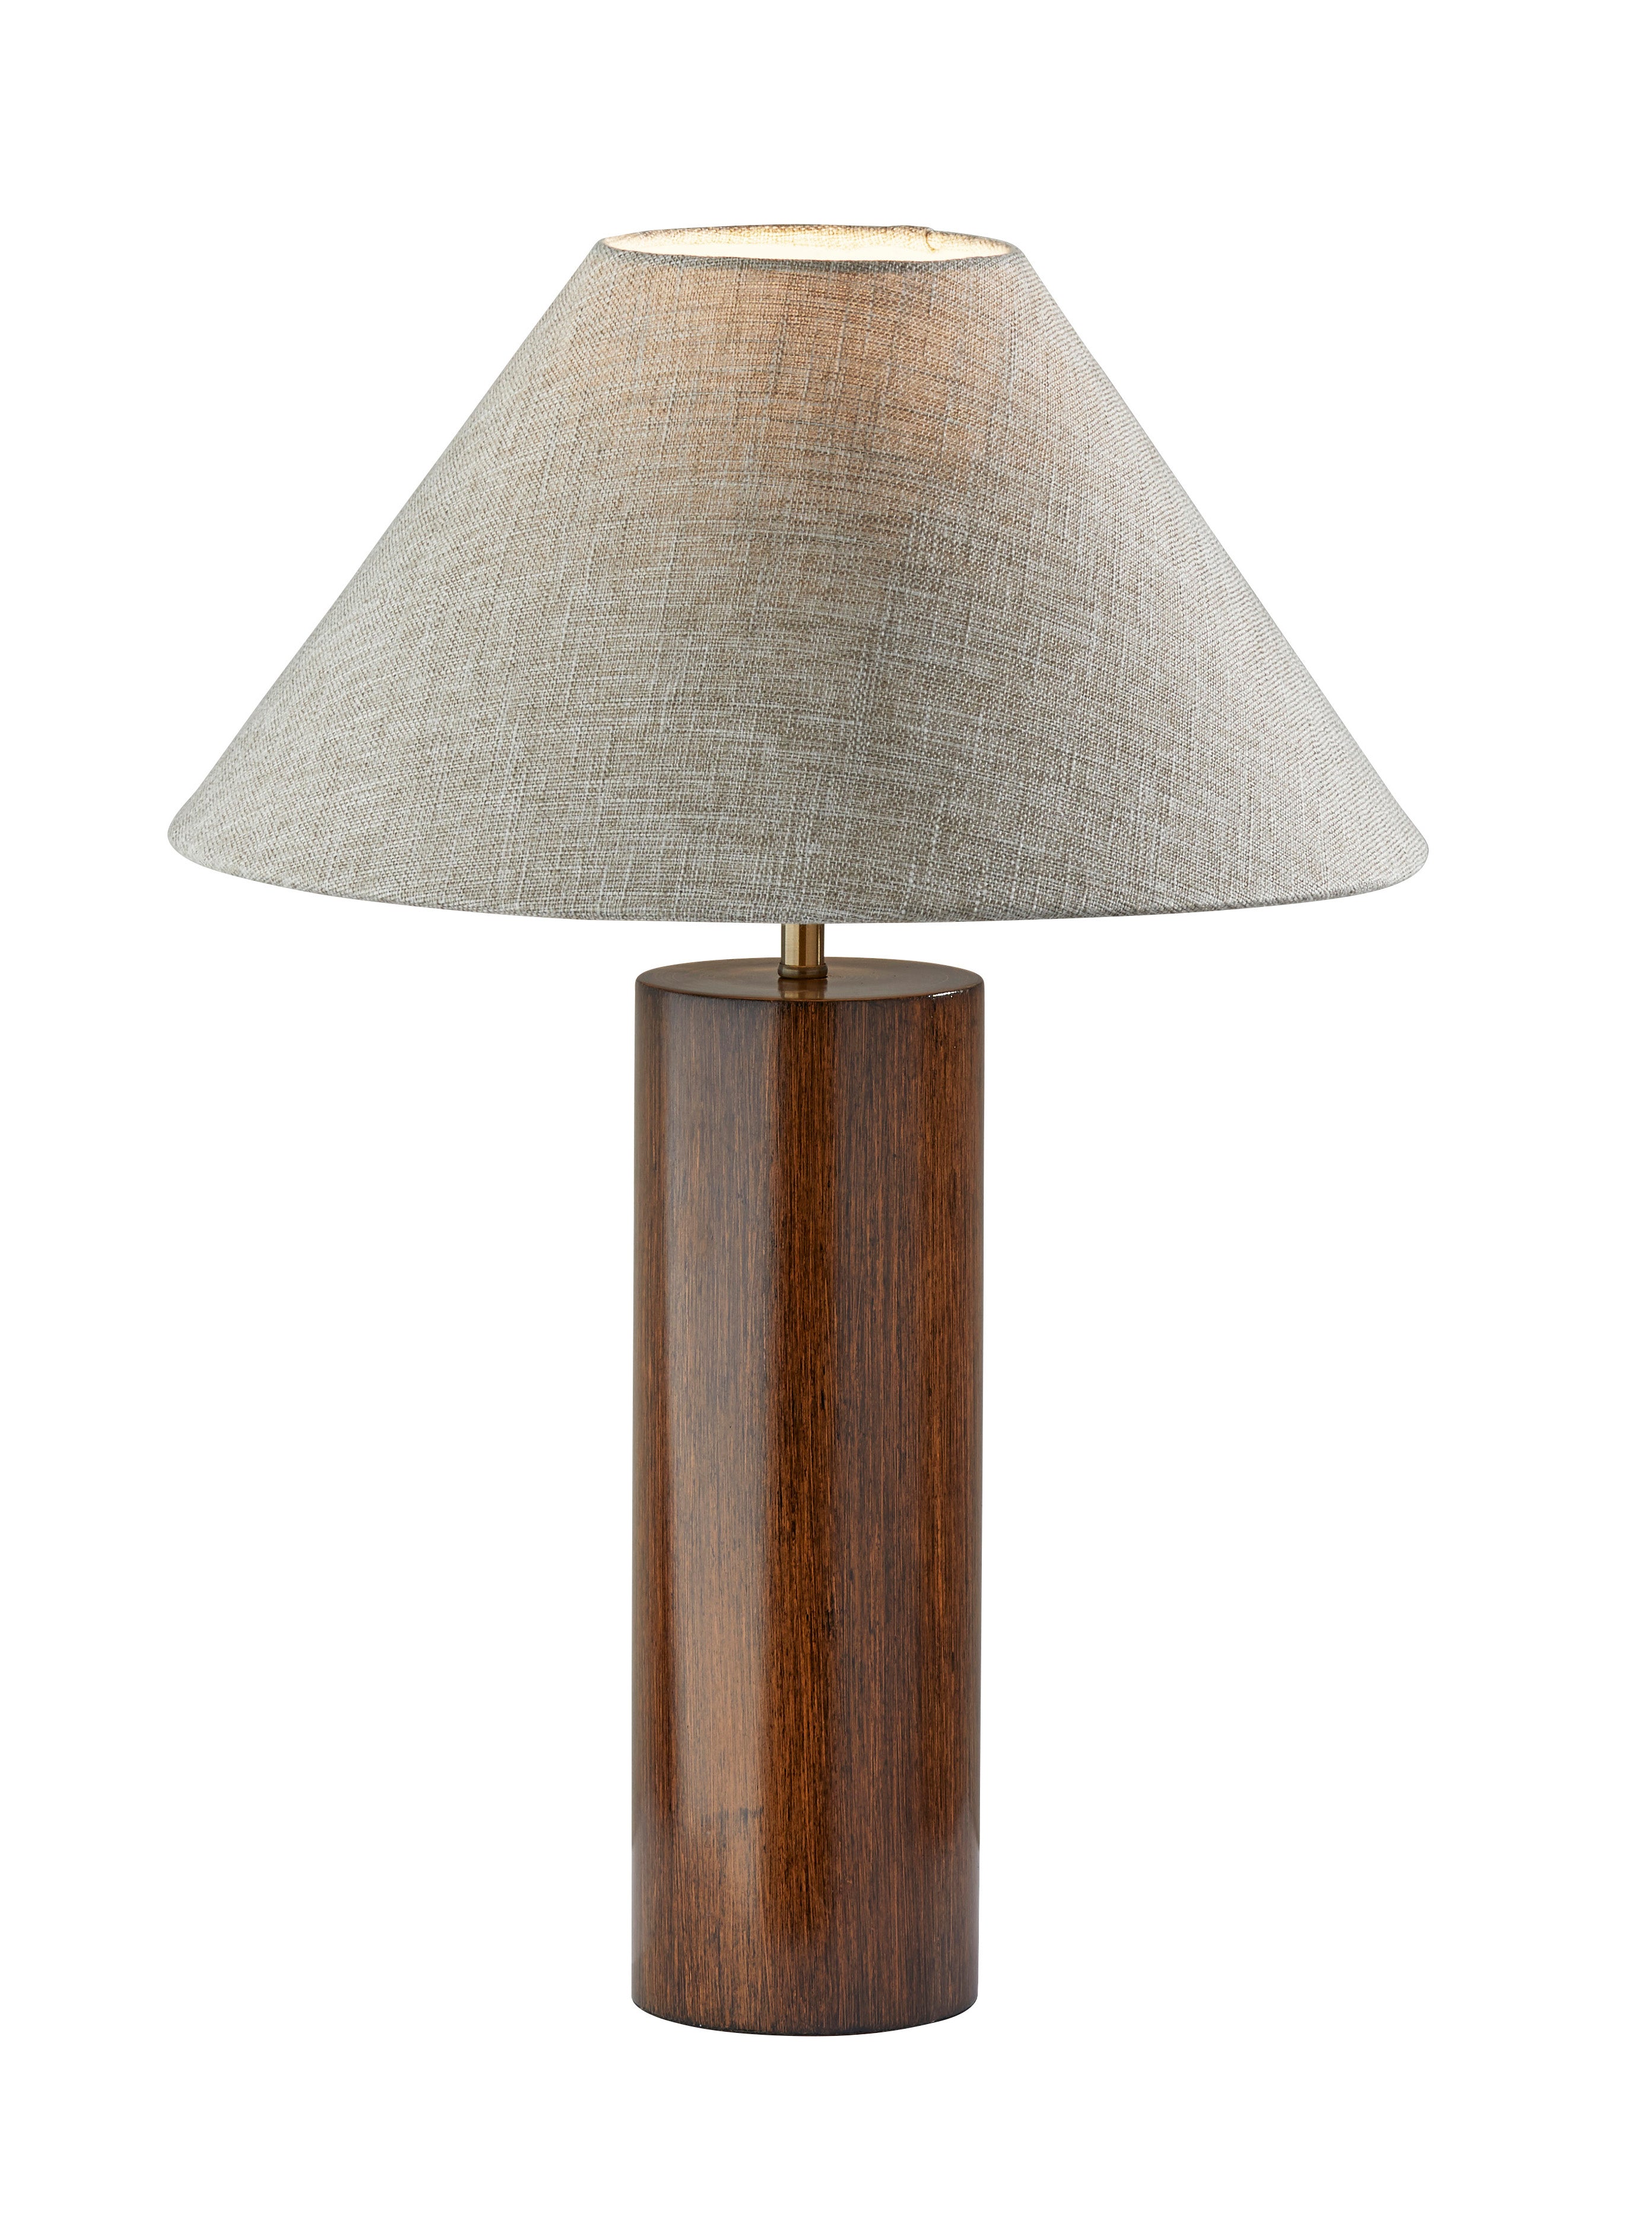 MARTIN Lampe sur table Bois, Or - 1509-15 | ADESSO